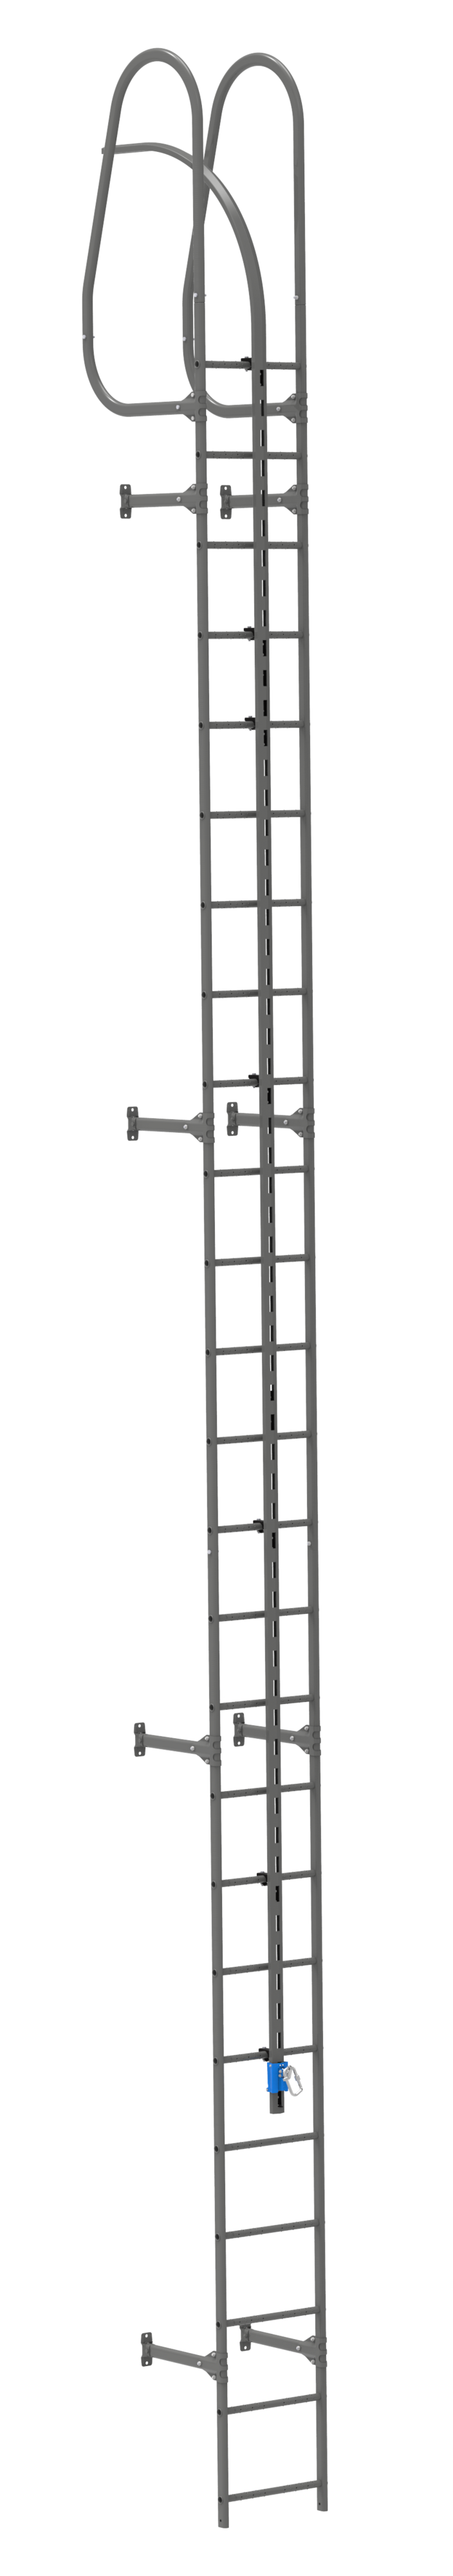 Pisko wall ladder with vertical safety rail